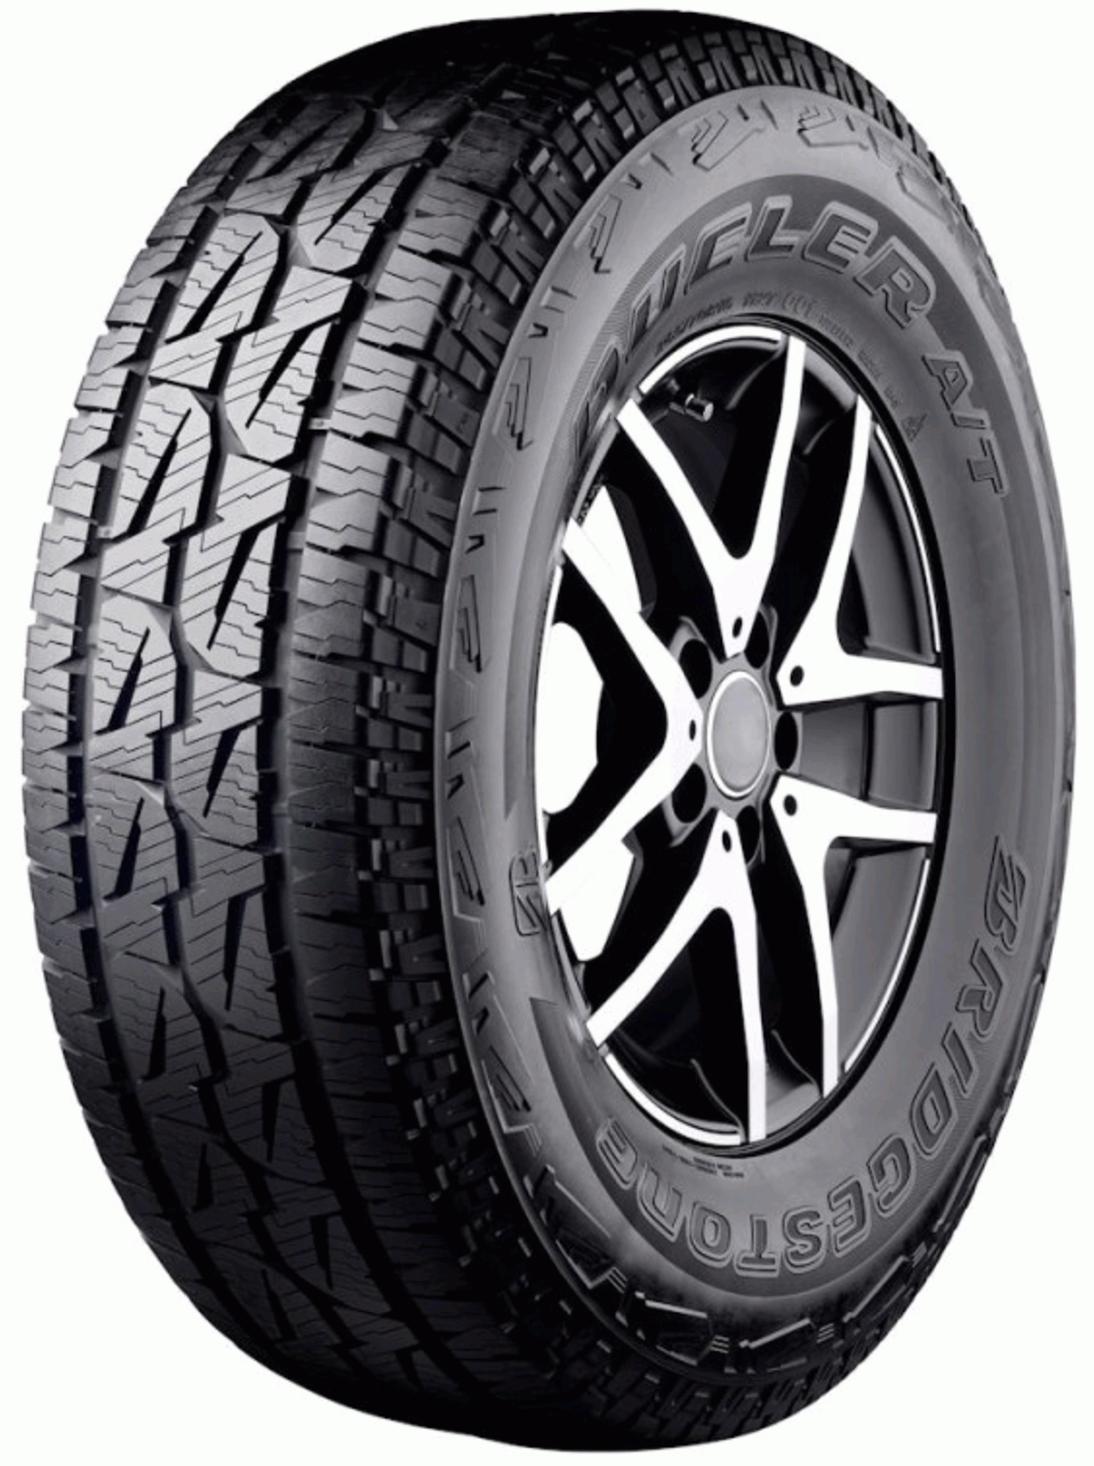 Reviews Dueler Tests Bridgestone Tire - and AT 001